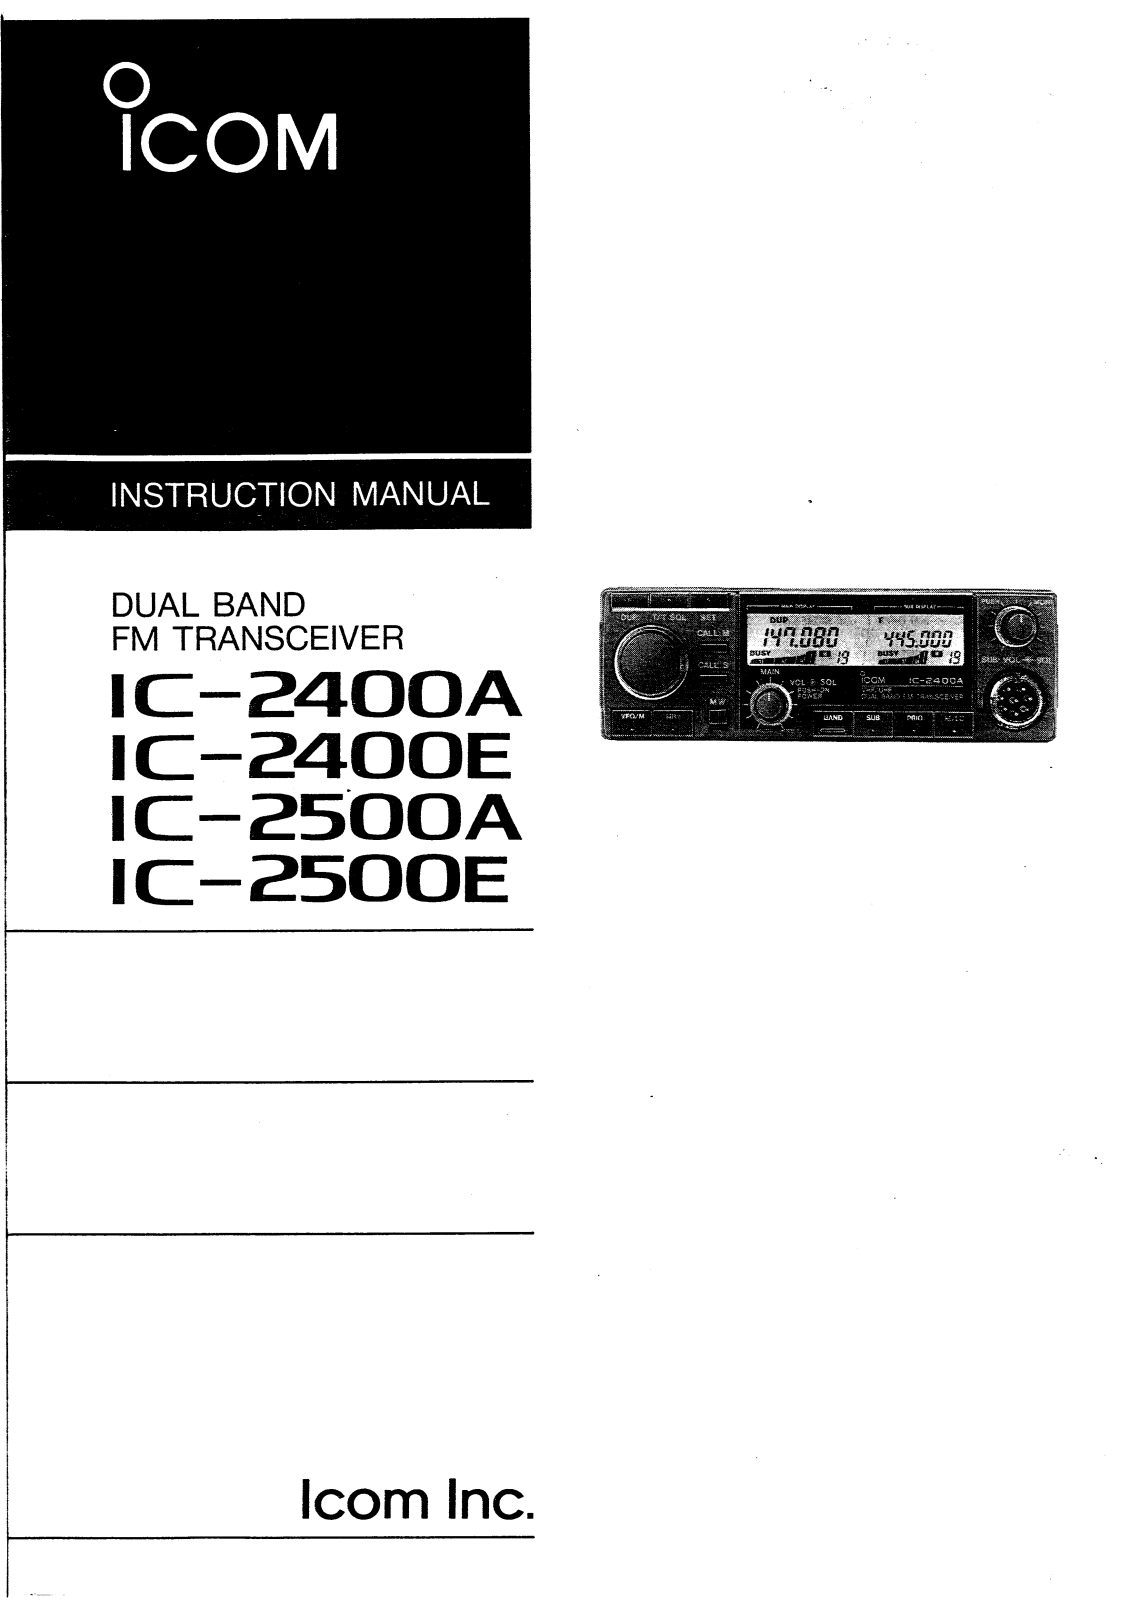 Icom IC-2500E, IC-2500A, IC-2400E, IC-2400A User Manual